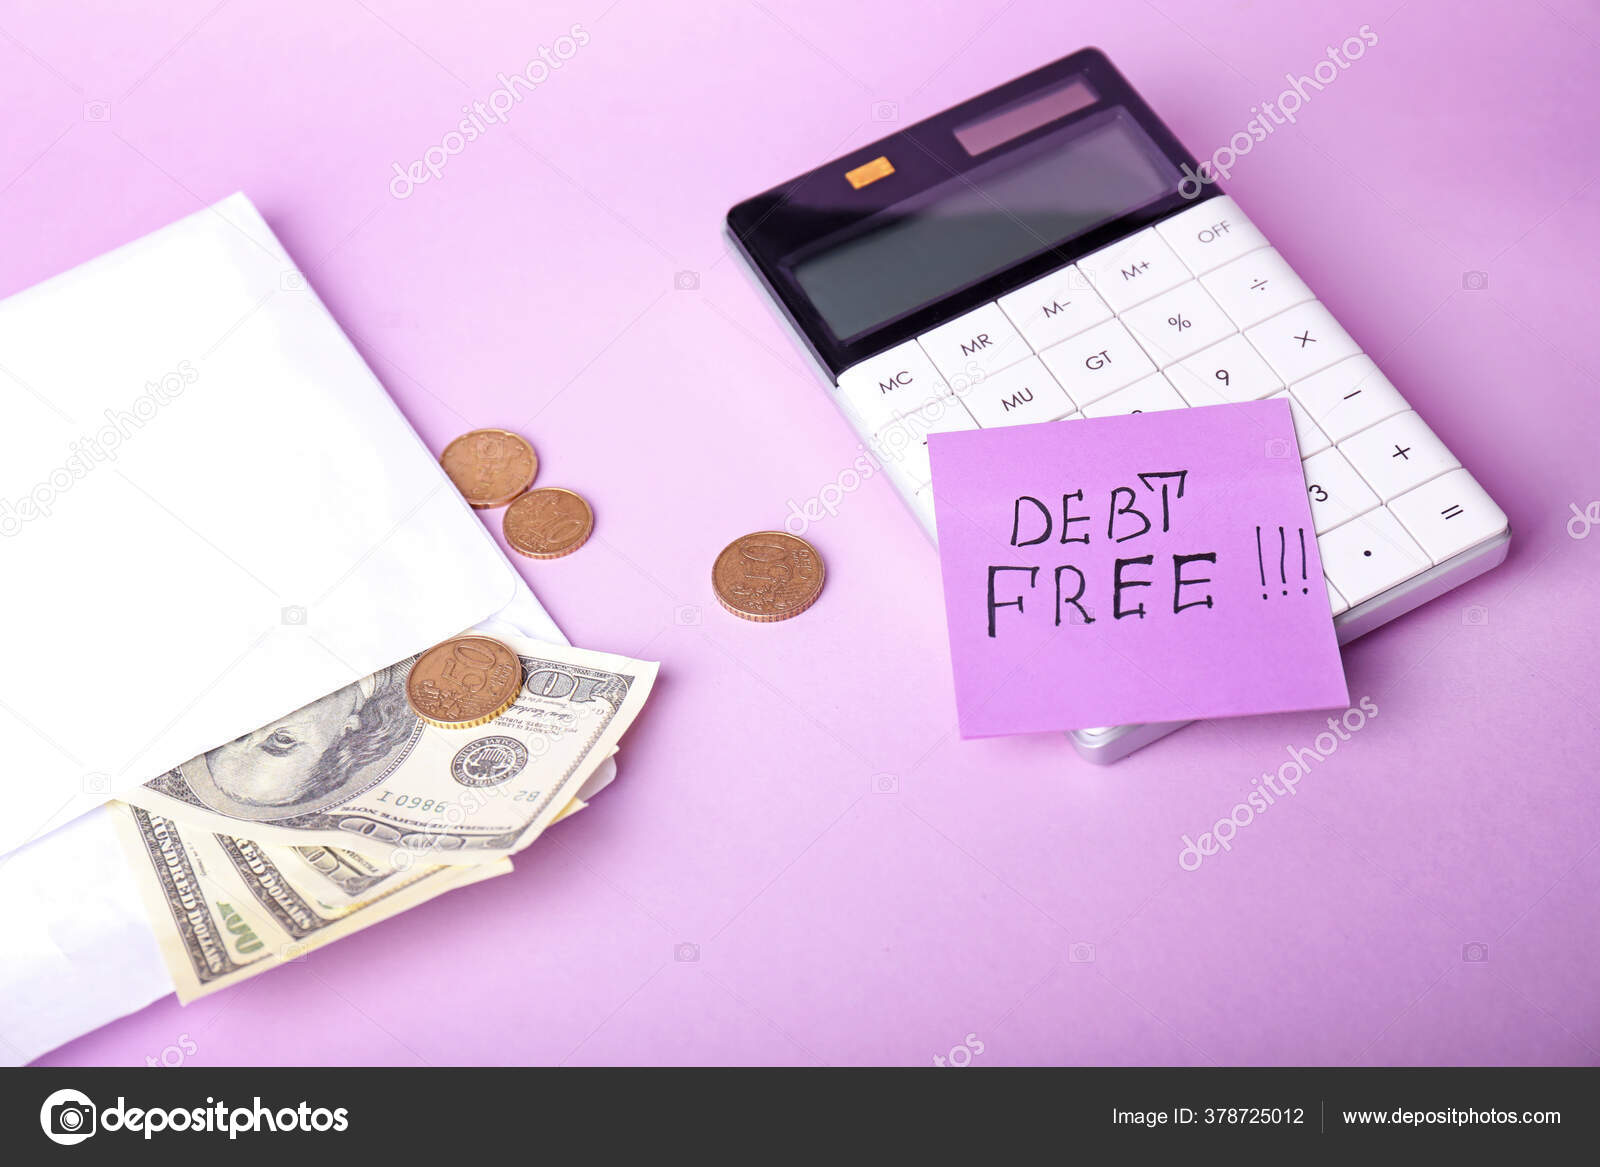 Use Free  money calculator